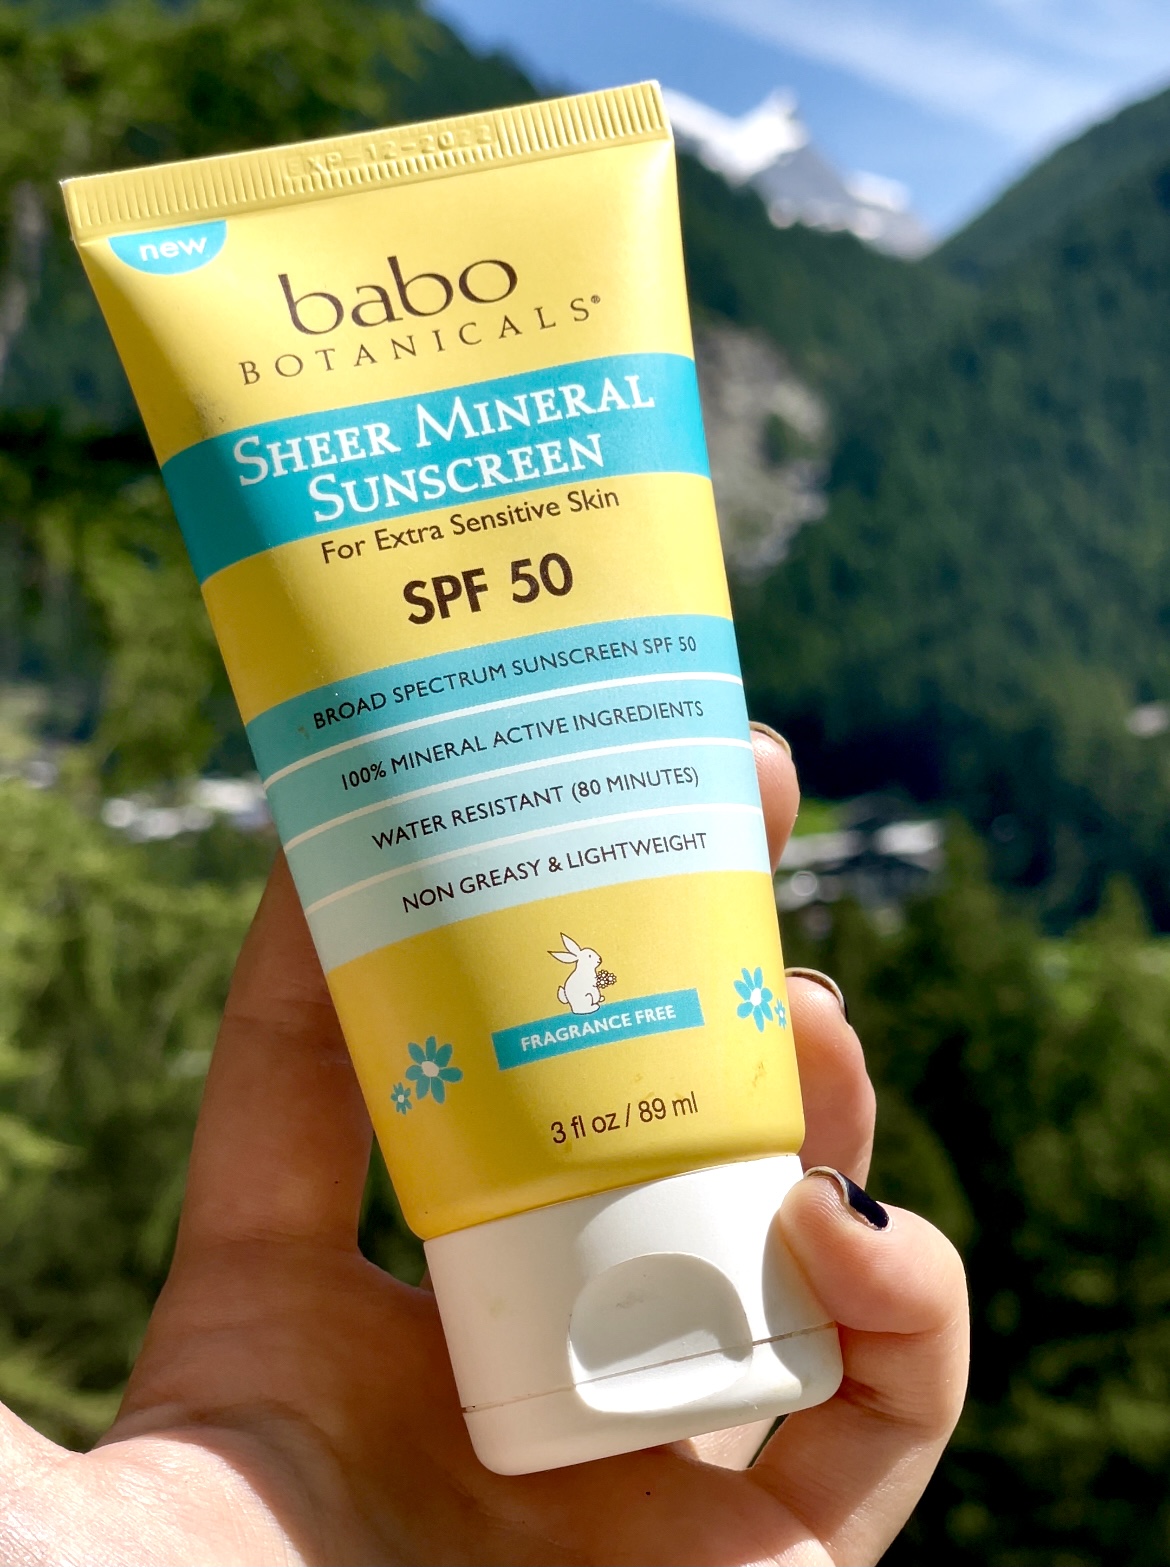 Babo botanicals sheer mineral sunscreen